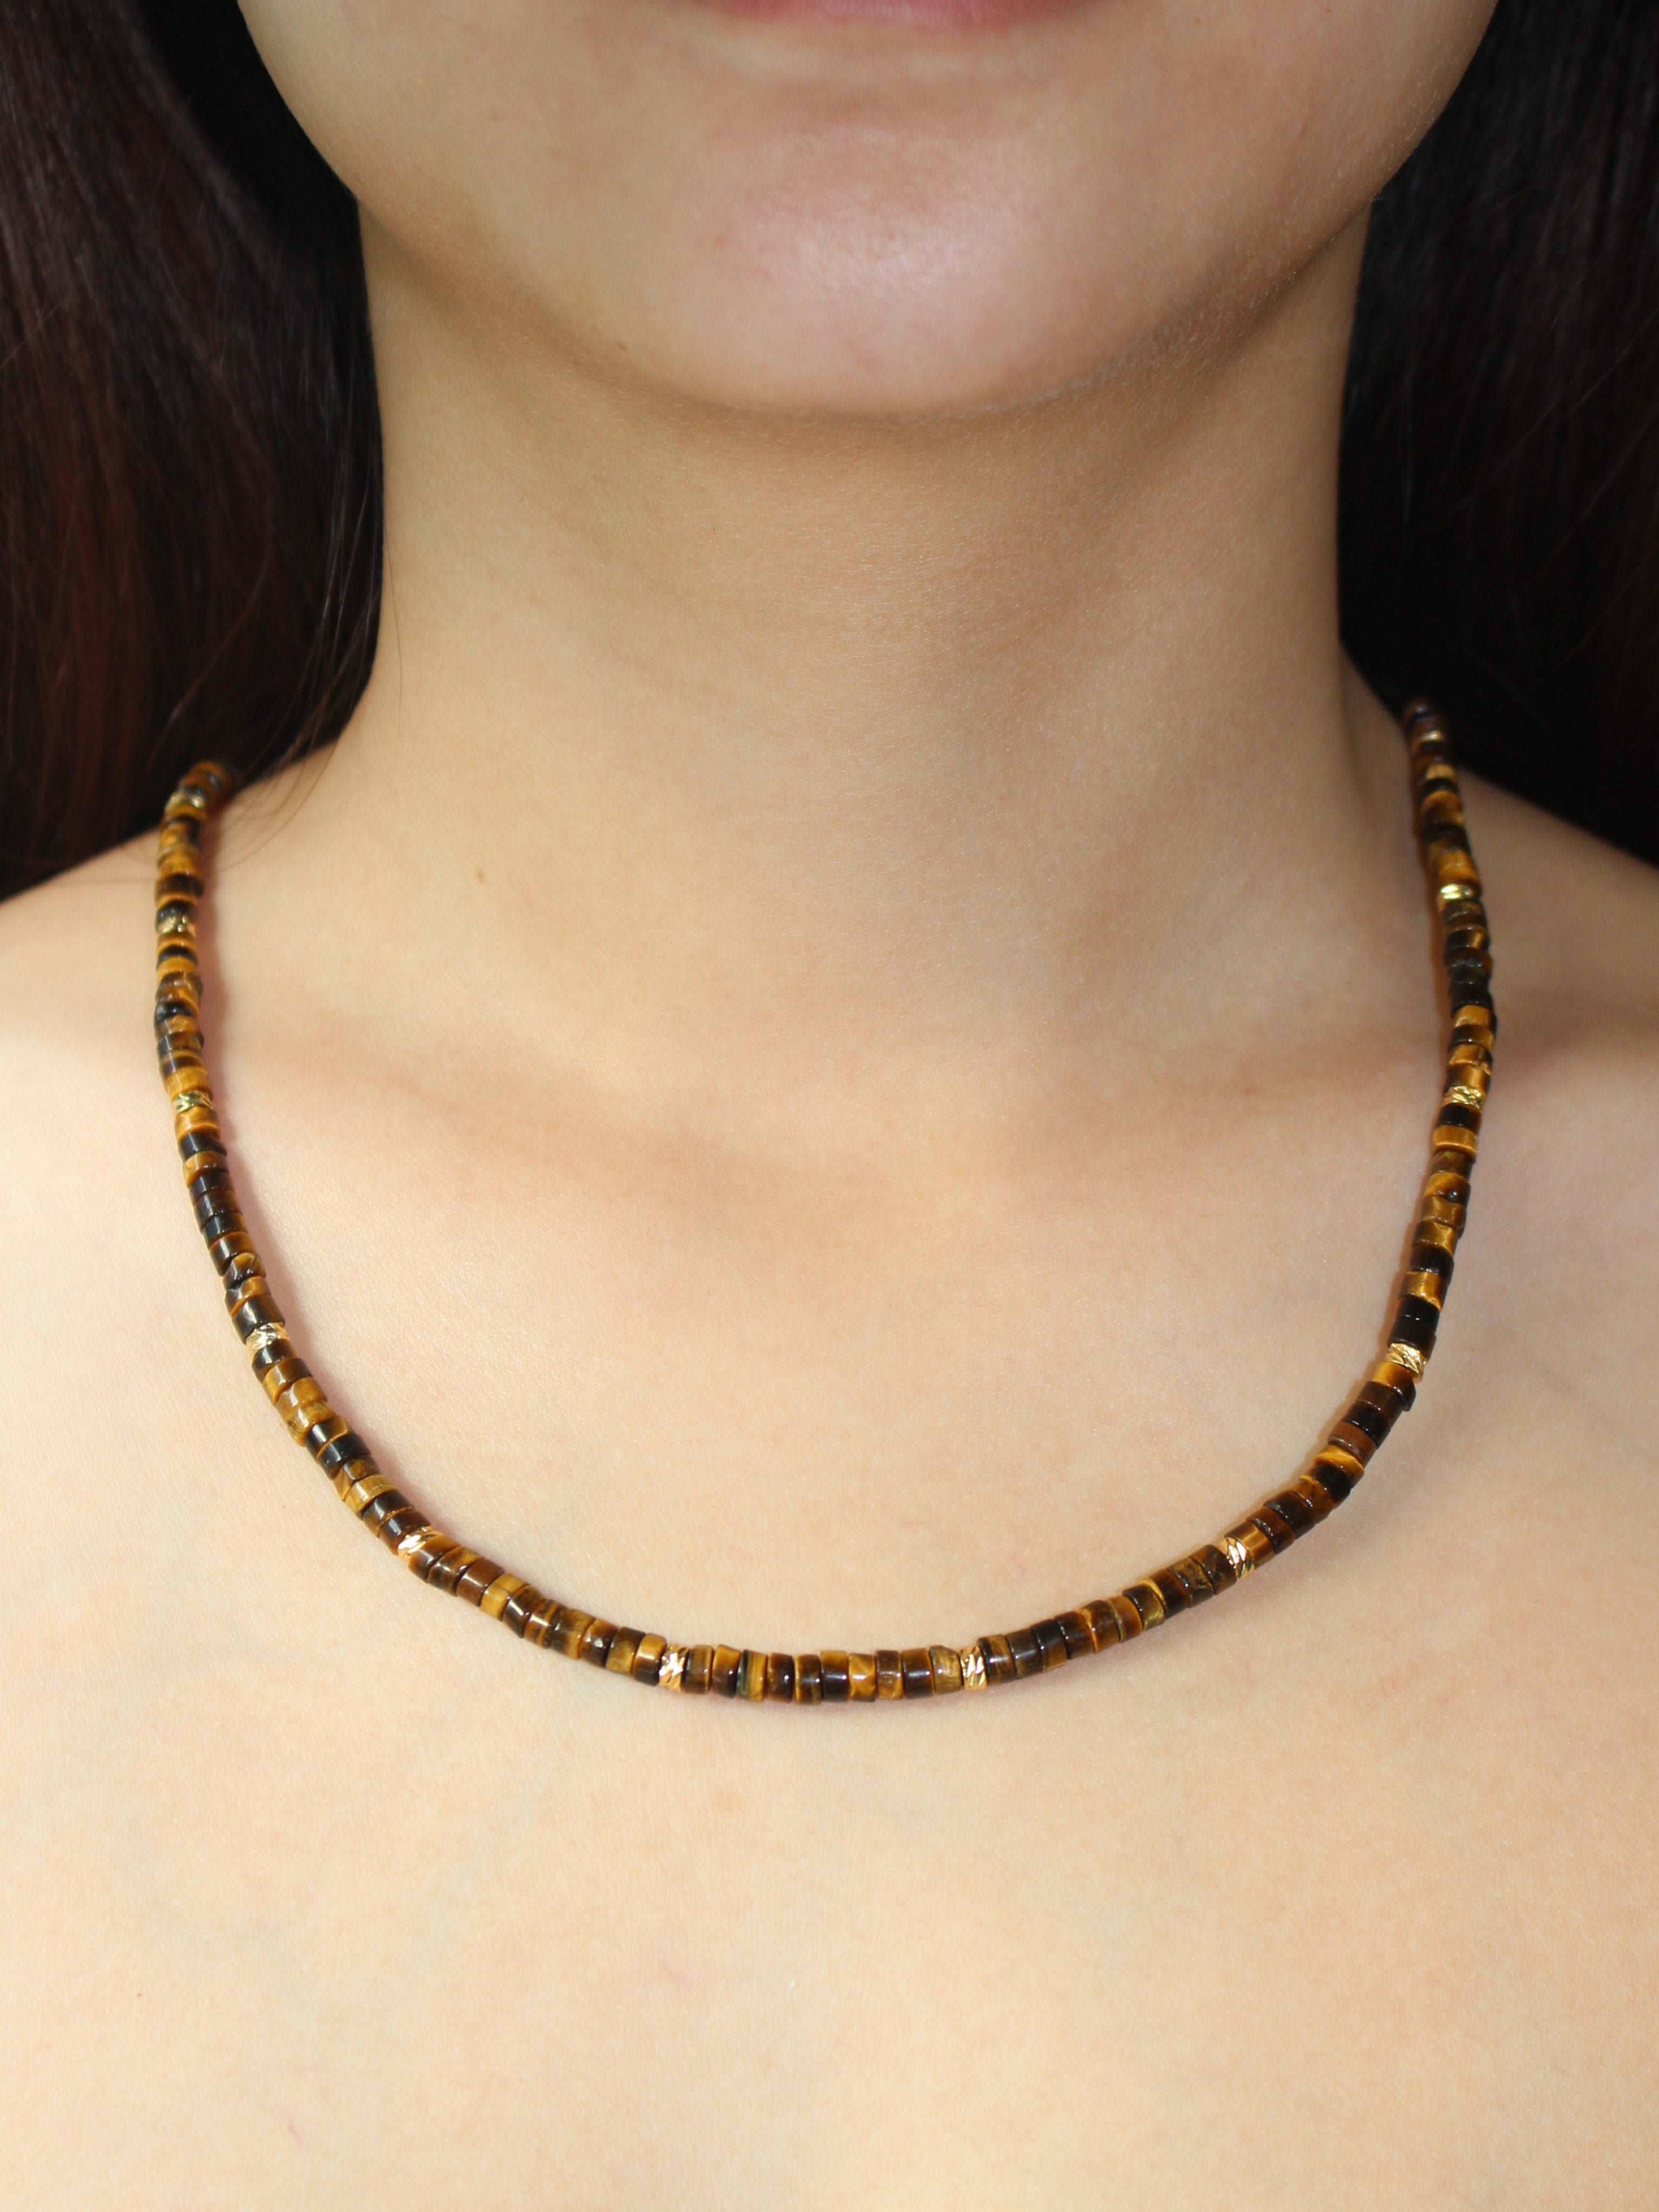 wearing Handmade Tiger's Eye Bead Necklace